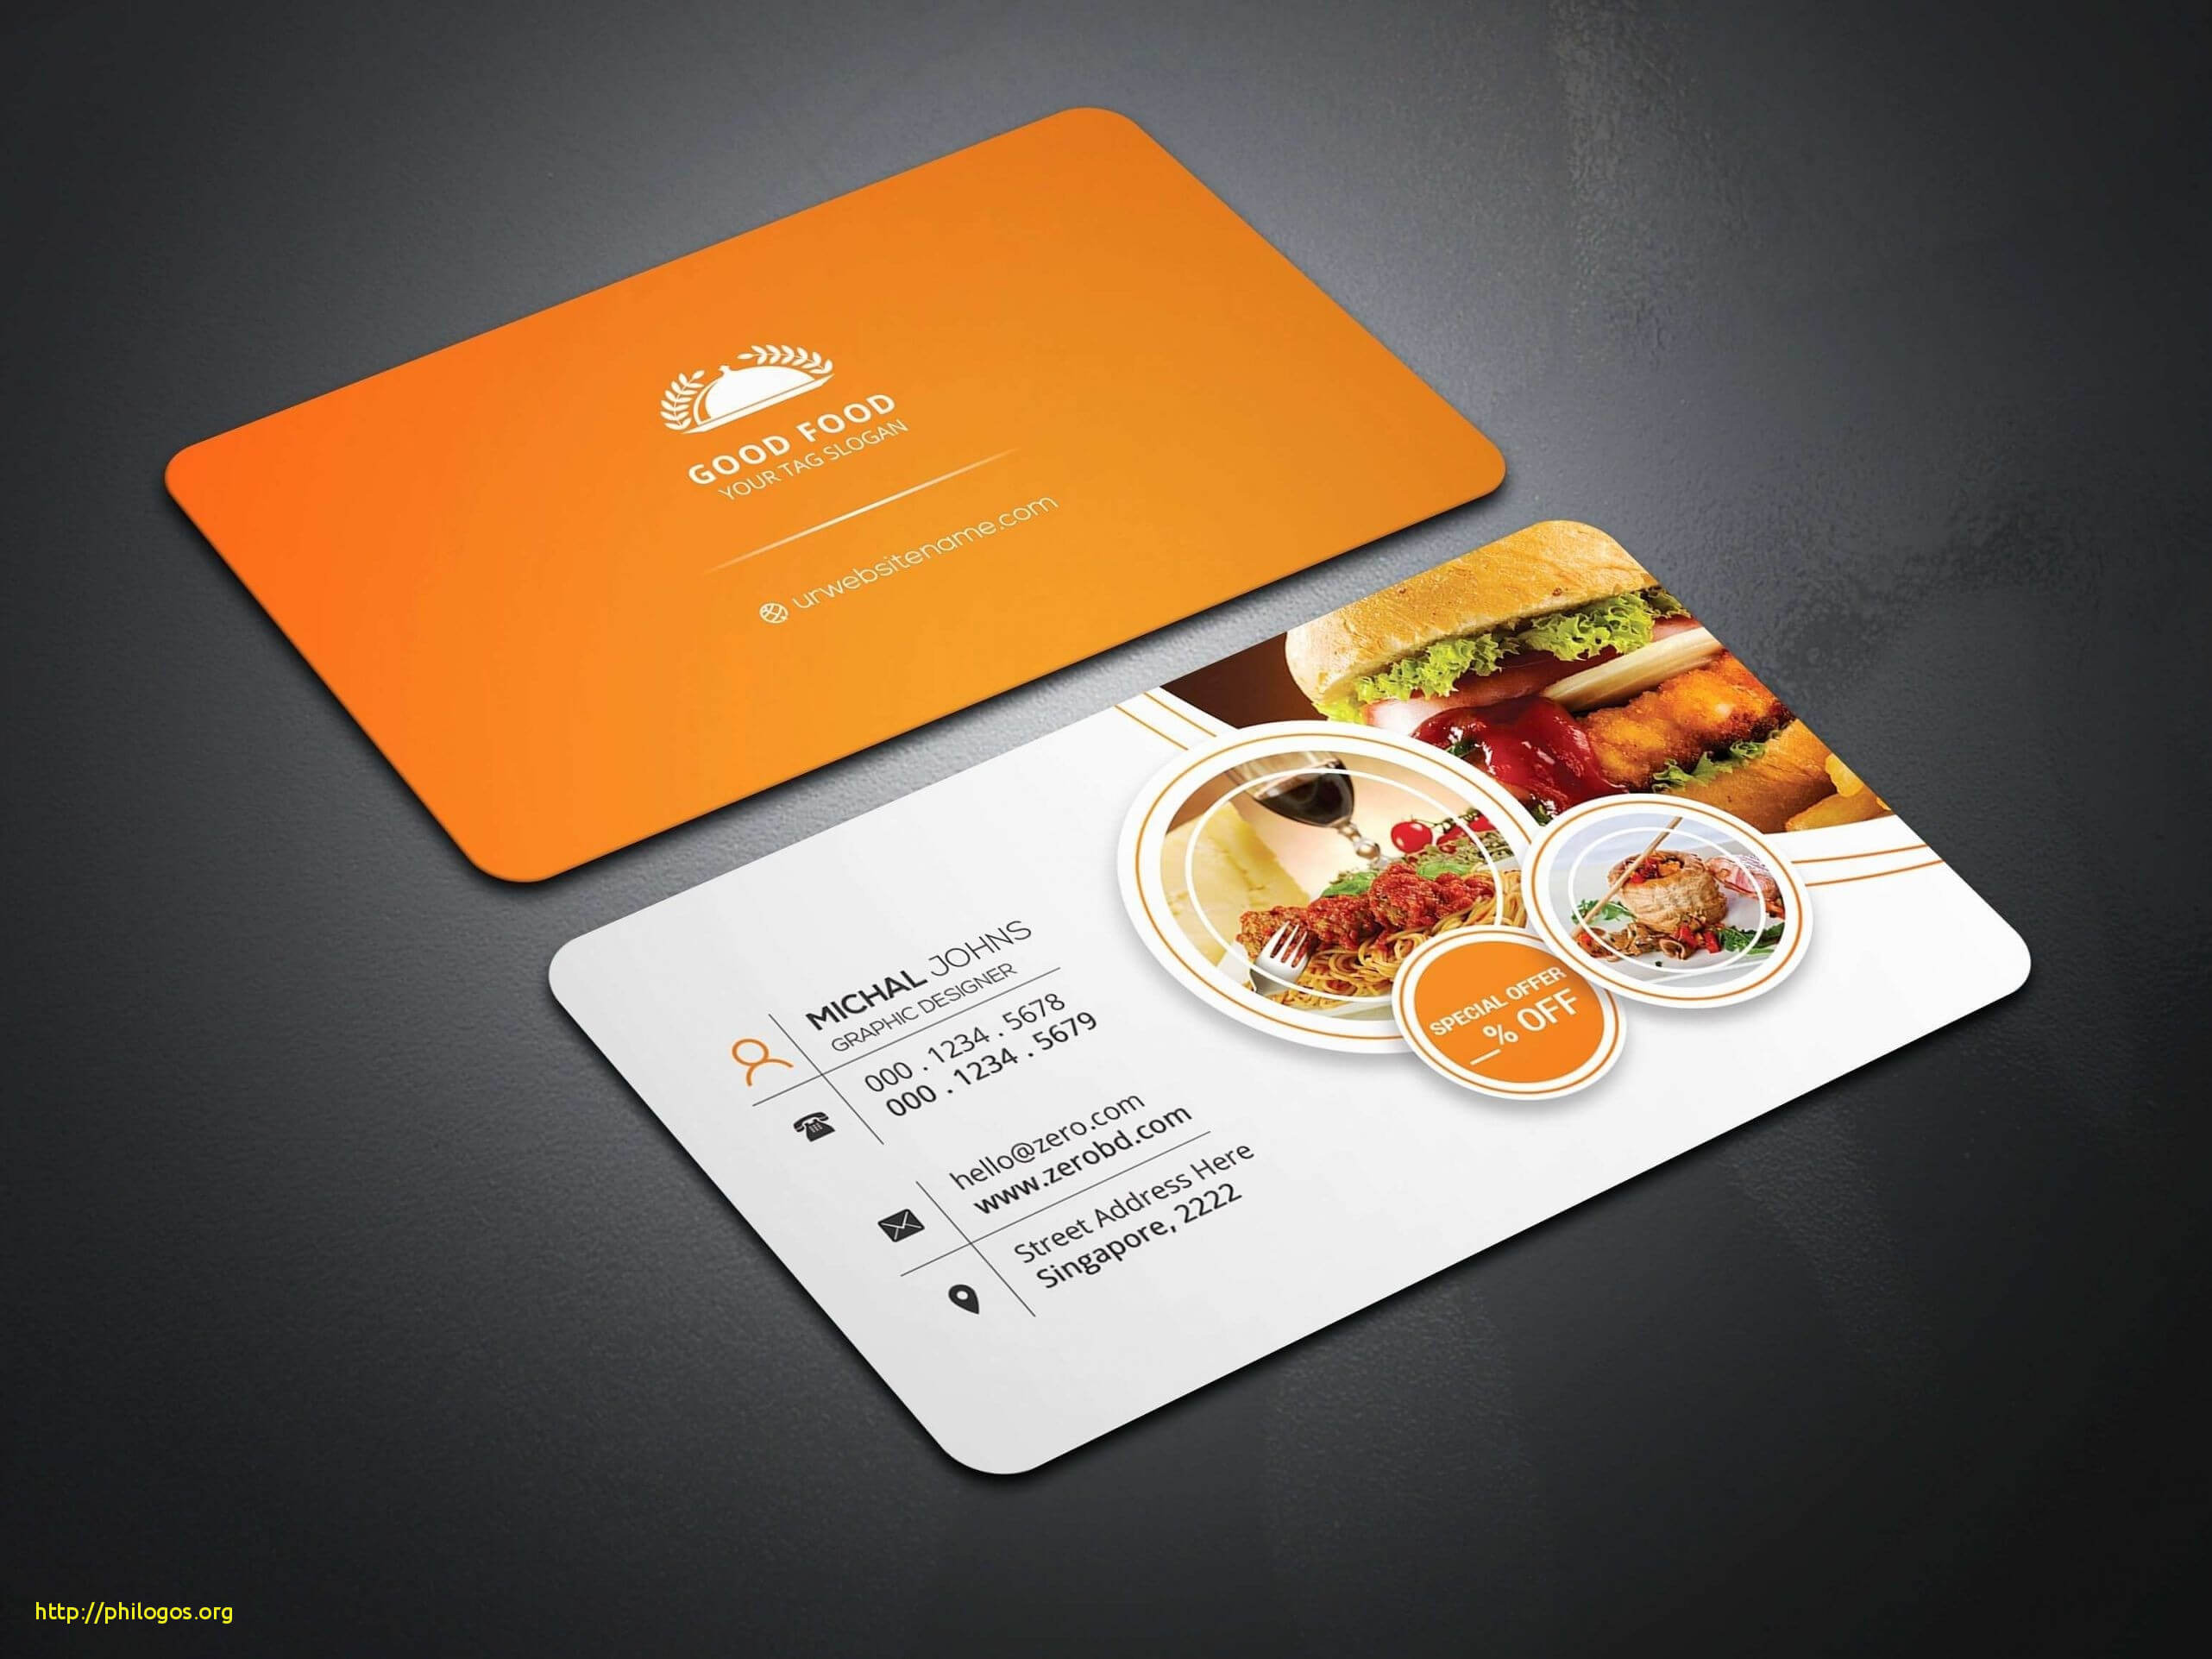 Inspirational Food Business Cards Templates Free | Philogos Inside Food Business Cards Templates Free